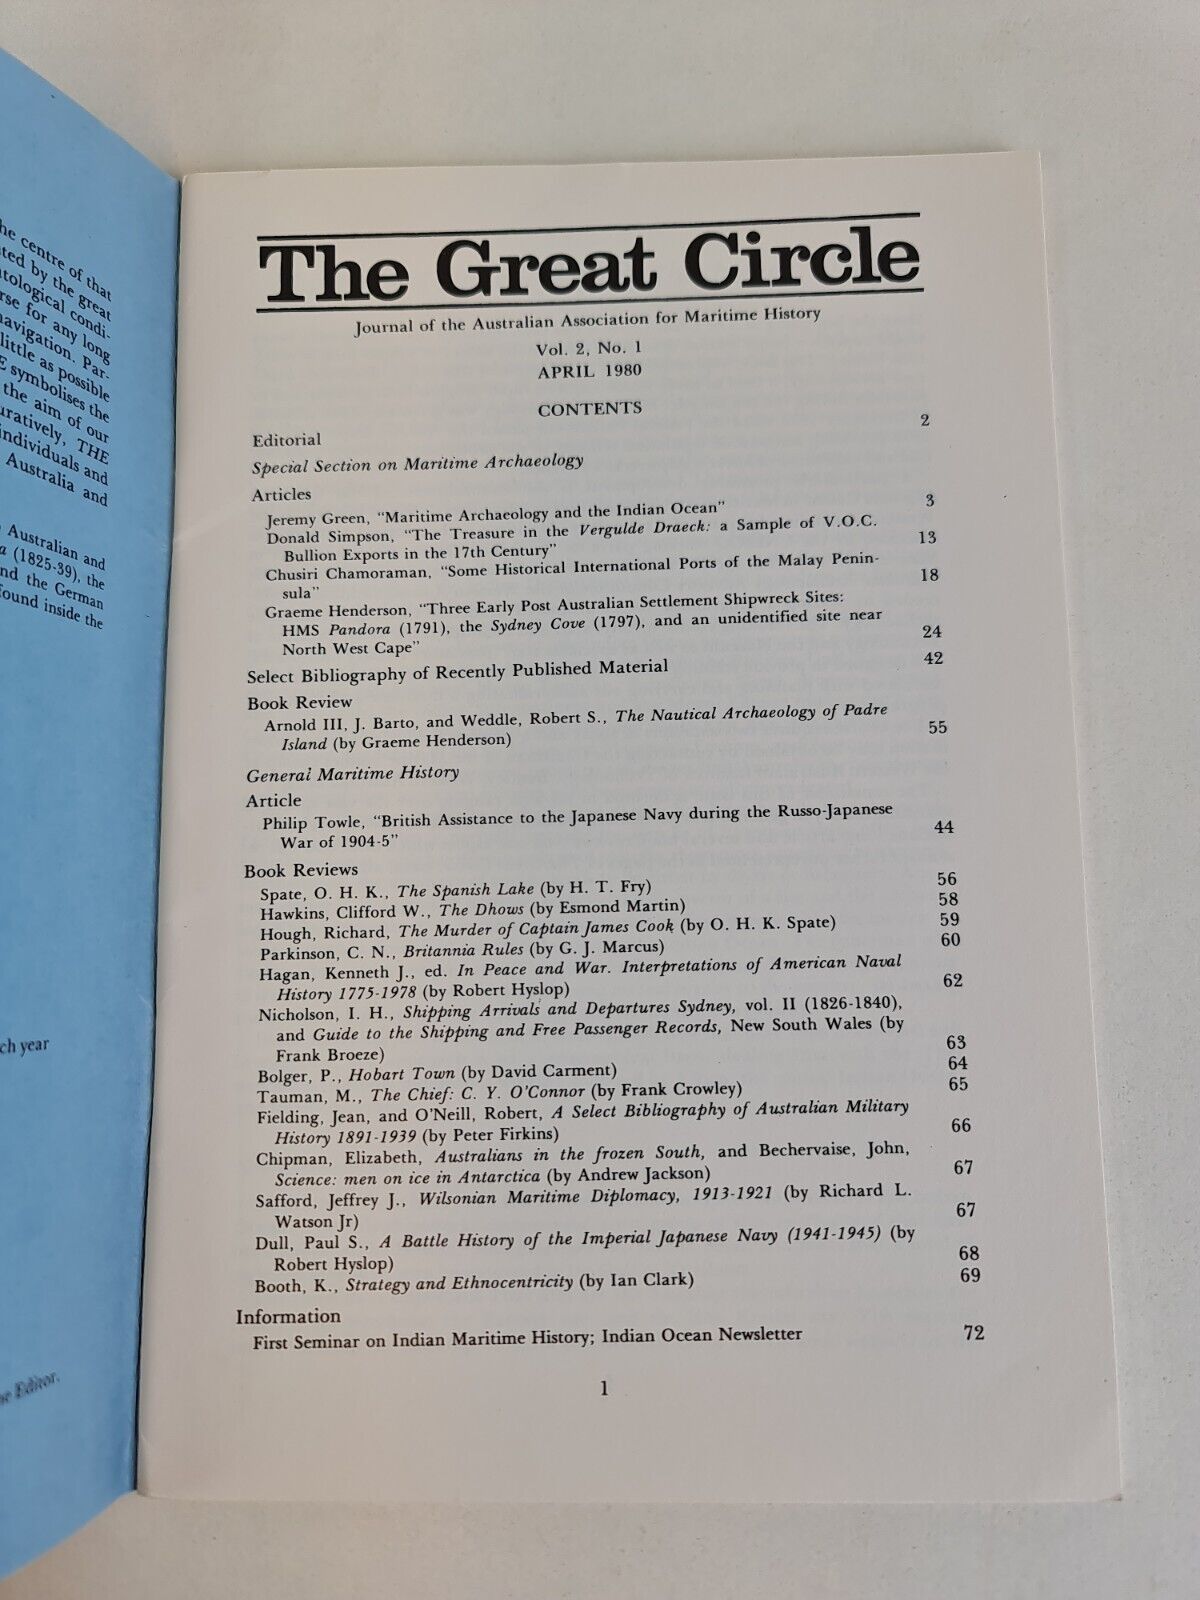 The Great Circle Vol 2 No. 1 April 1980 - Journal Australian Maritime History